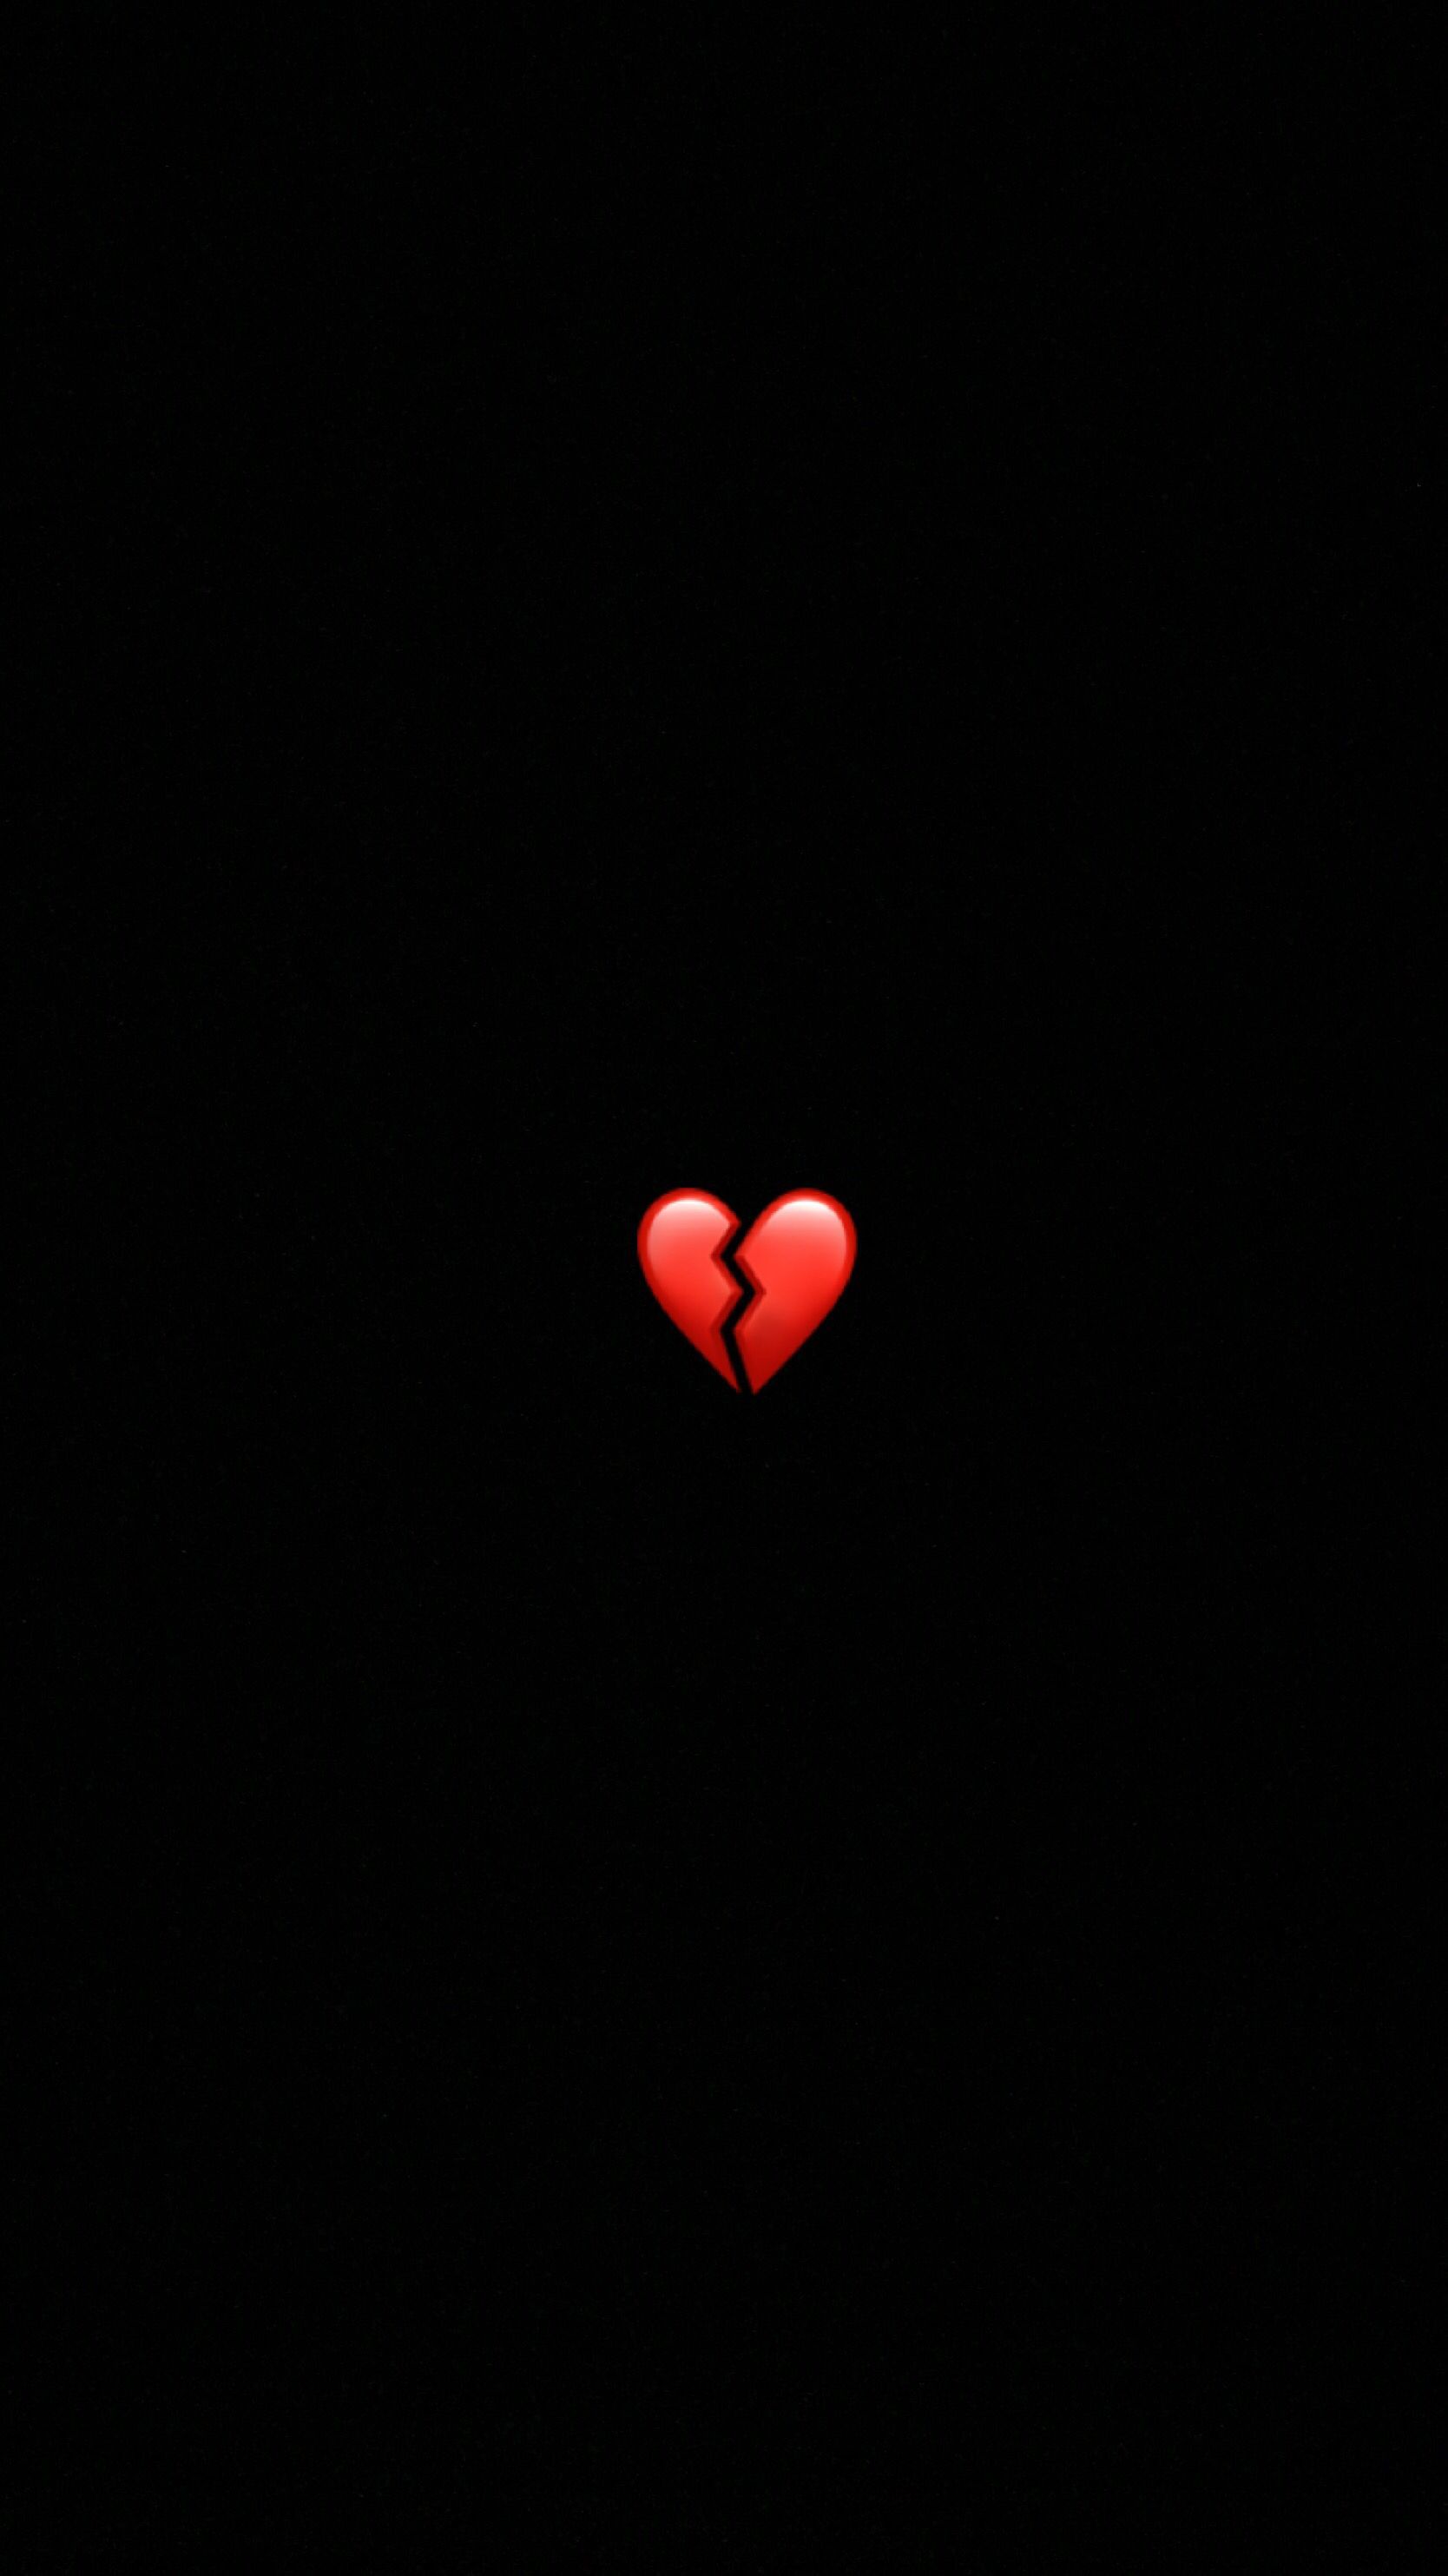 Broken Heart Emoji Wallpaper Pin On Iphone Wallpaper Hd Art Maybe | The